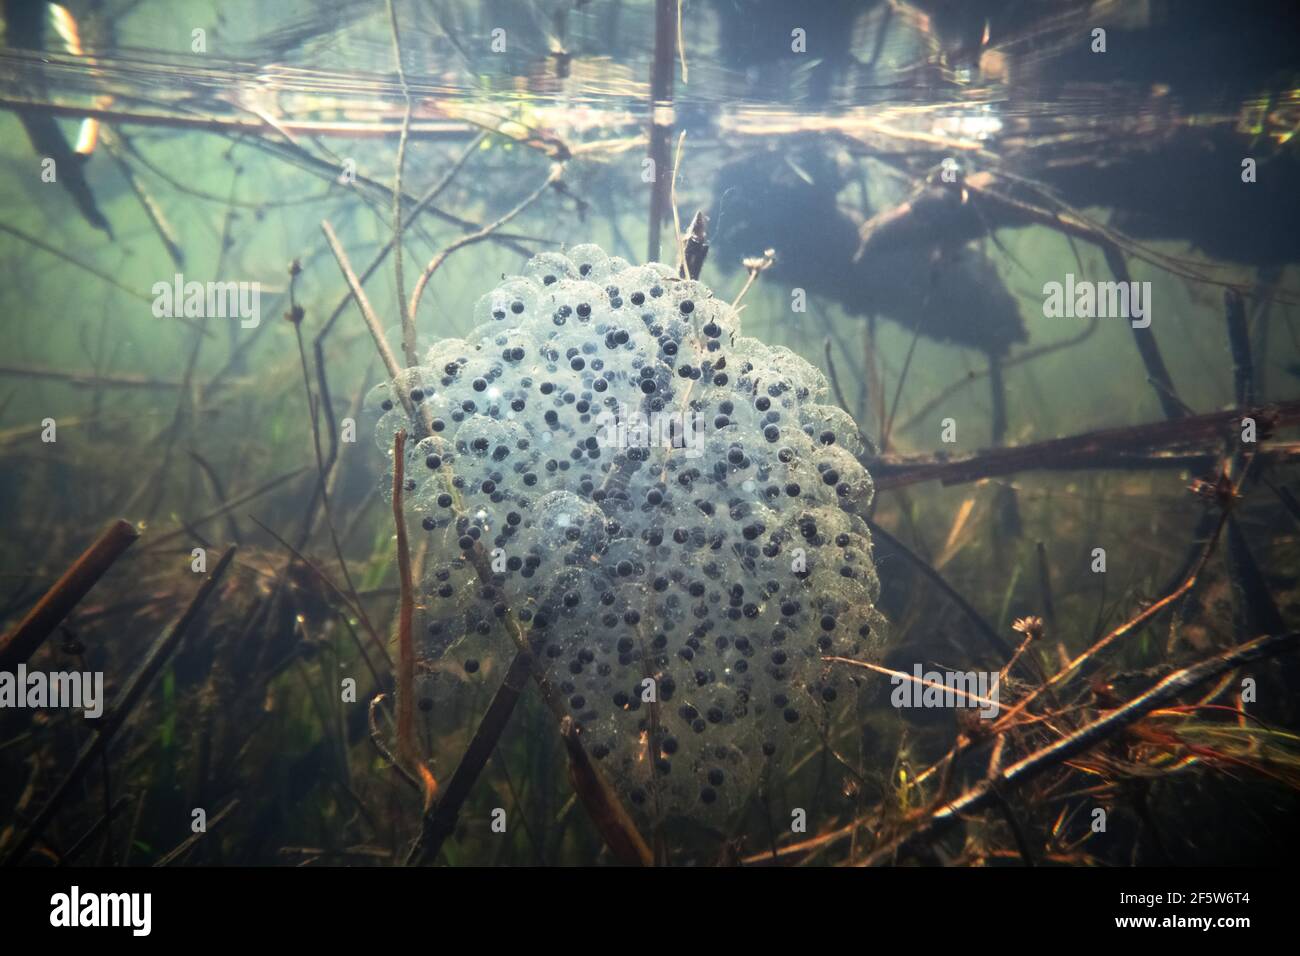 Agile frog (Rana dalmatina), underwater photograph spawn, spawn ball, North Rhine-Westphalia, Germany Stock Photo